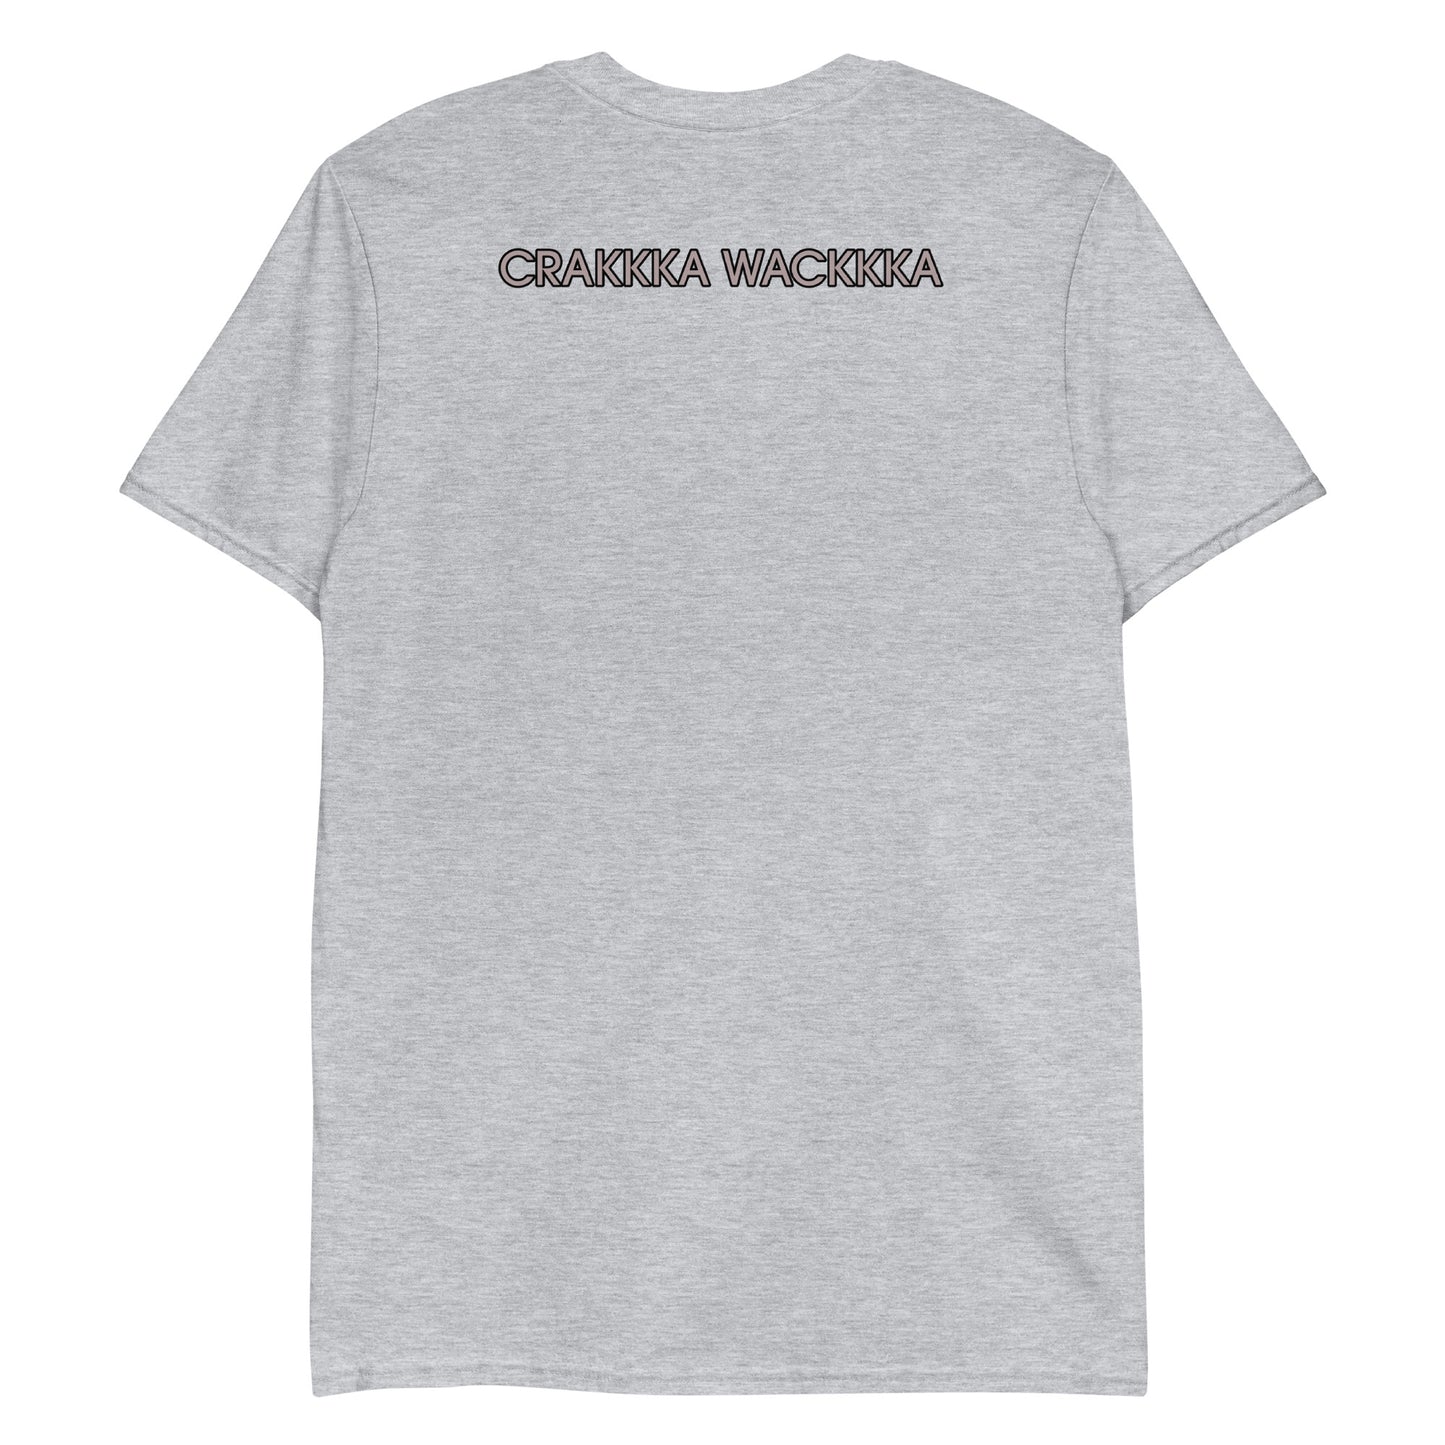 CRAKKKA WACKKKA - Short-Sleeve Unisex T-Shirt